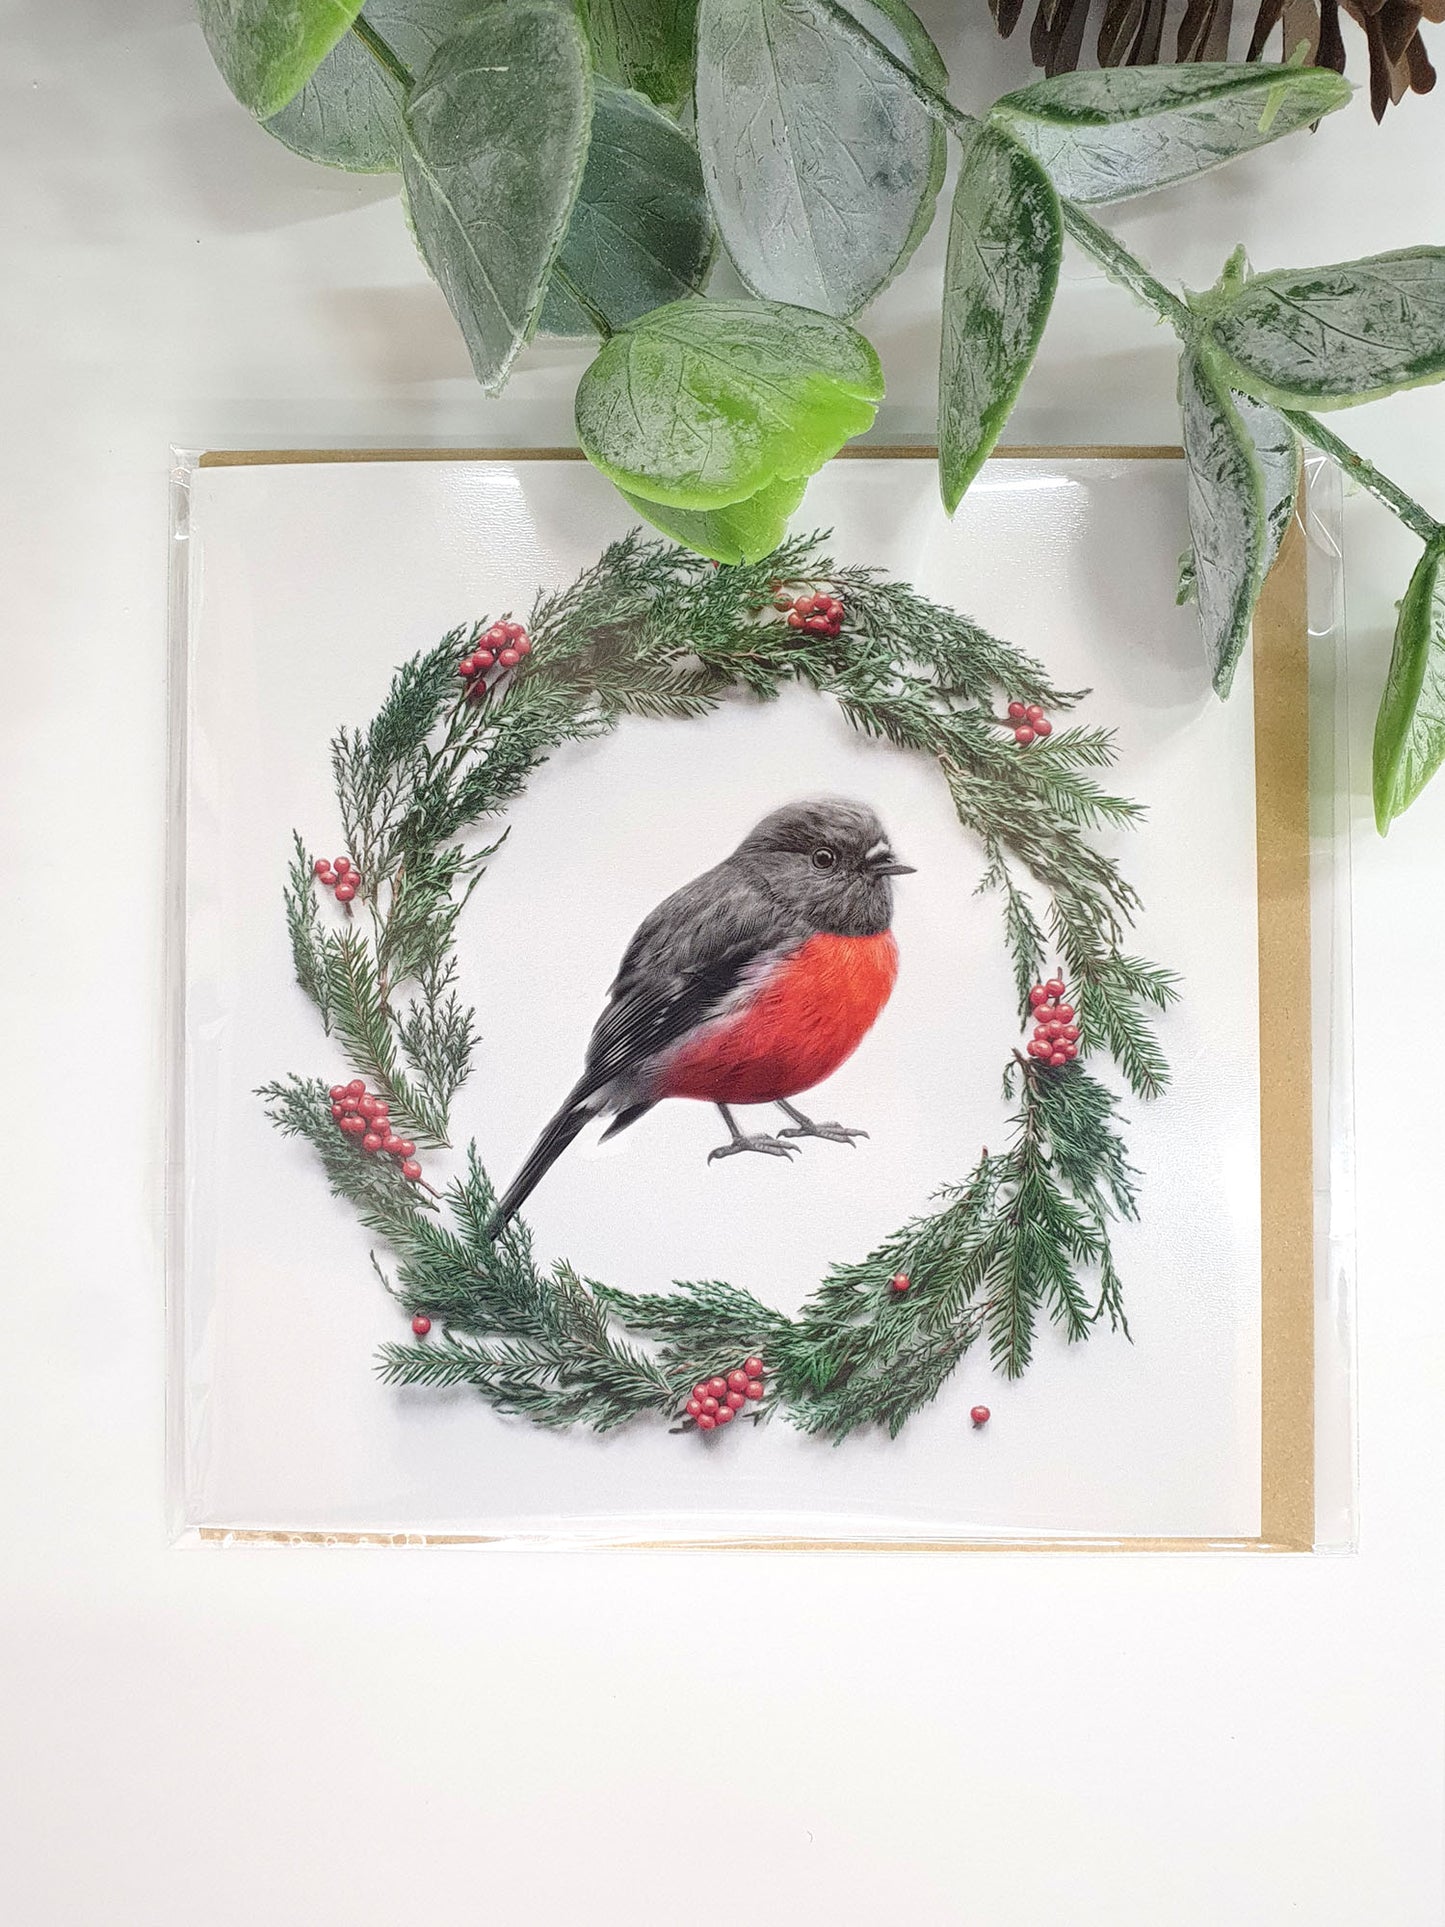 'Red Robin' Christmas card